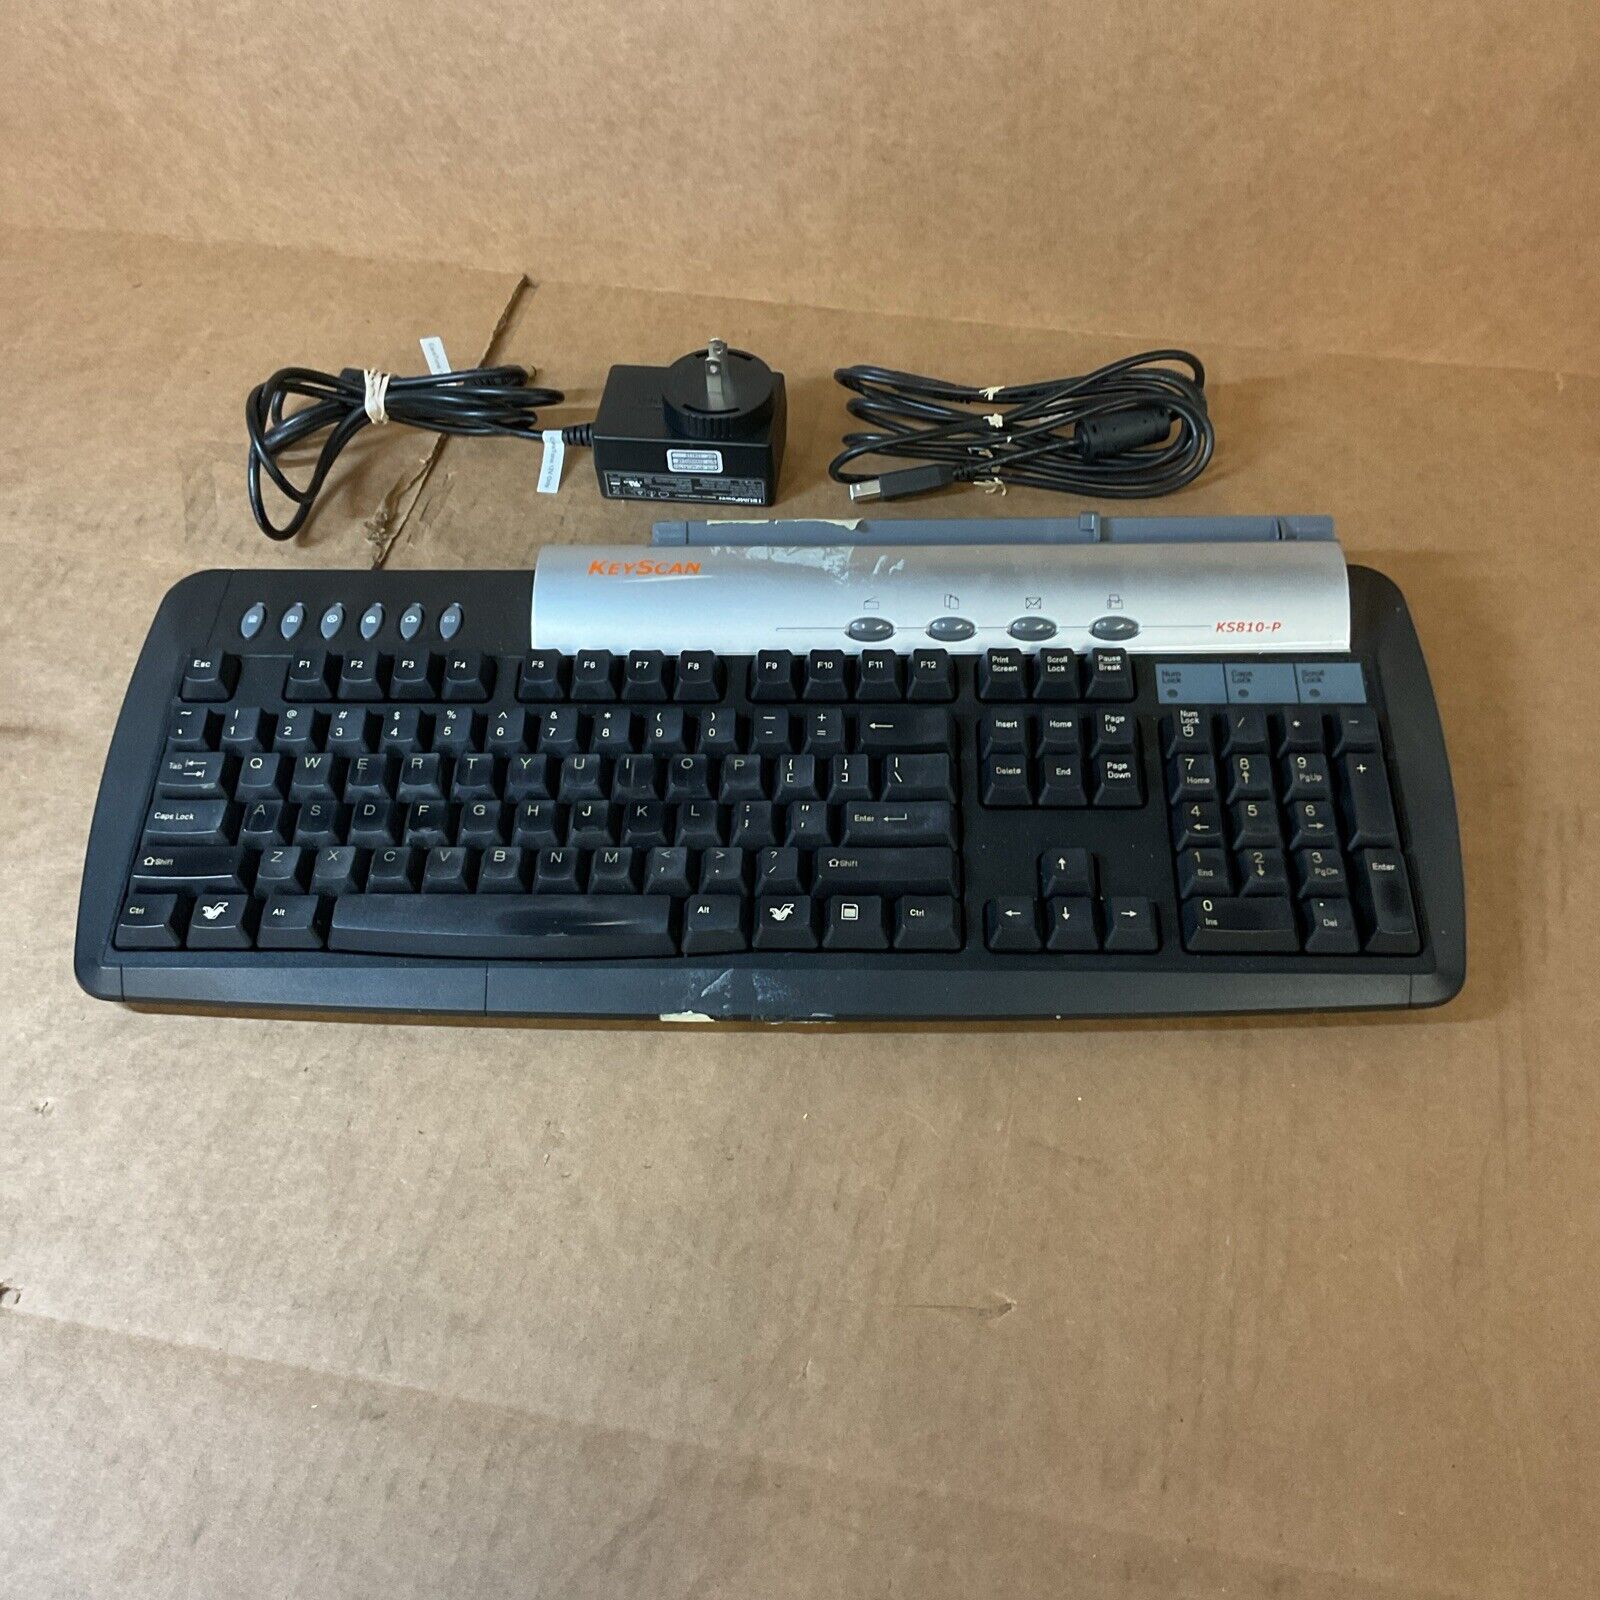 KeyScan KS810-P Keyboard Scanner USB Imaging Keyboard with Auto Scan